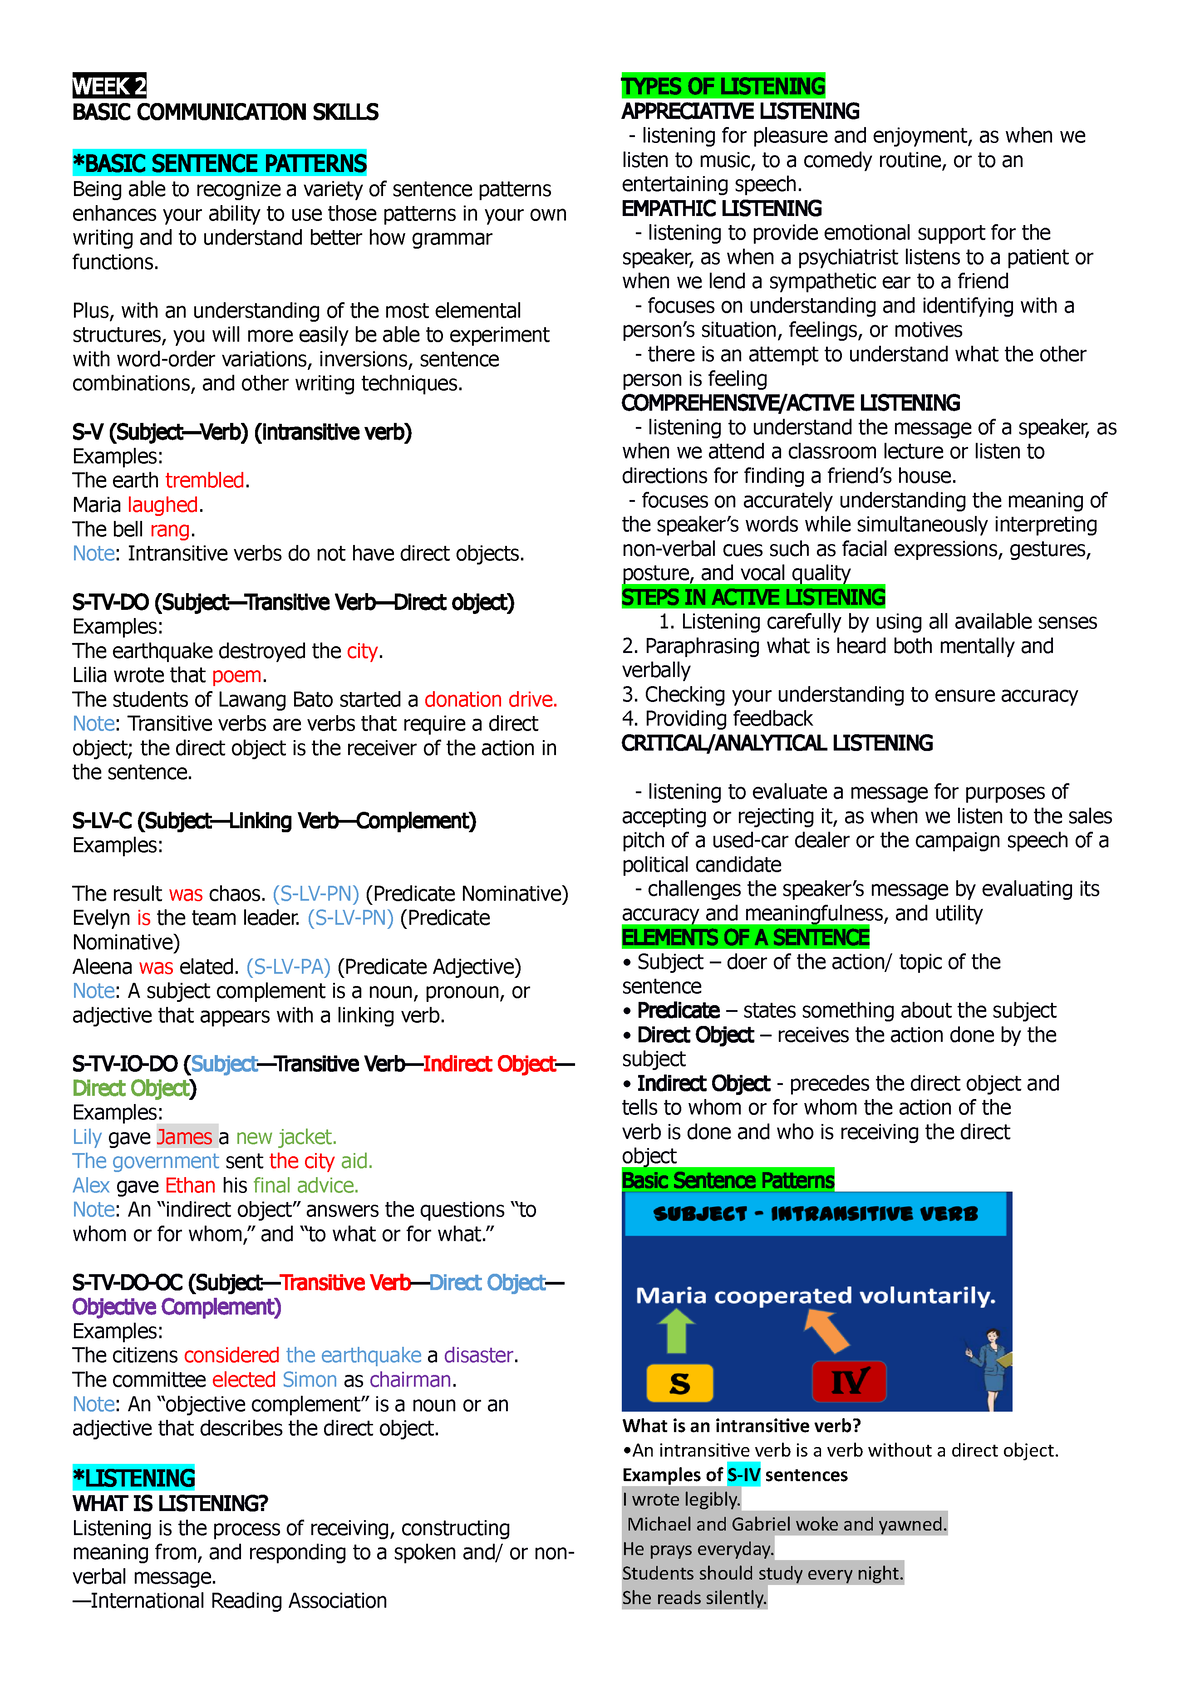 eng111-reviewer-english111-week-2-basic-communication-skills-basic